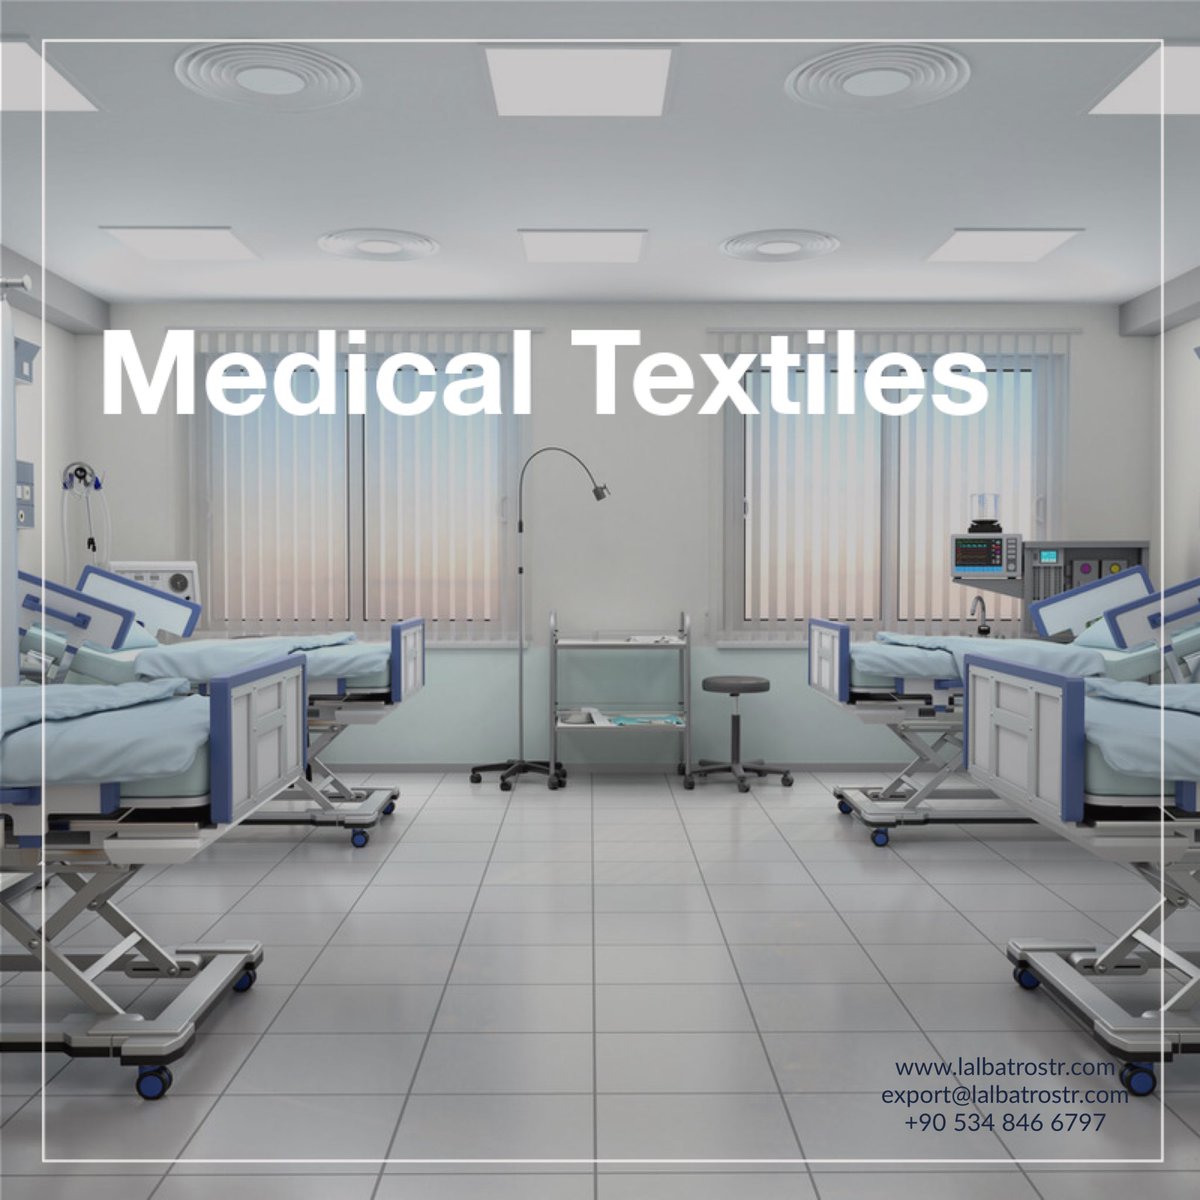 Contact us today for your medical textiles inquiries! #LAlbatrosExports #B2B #MedicalTextiles #medicalproducts #B2B #HealthcareEssentials #buyinbulk #GlobalExports #turkishexporters  #import #export 

lalbatrostr.com